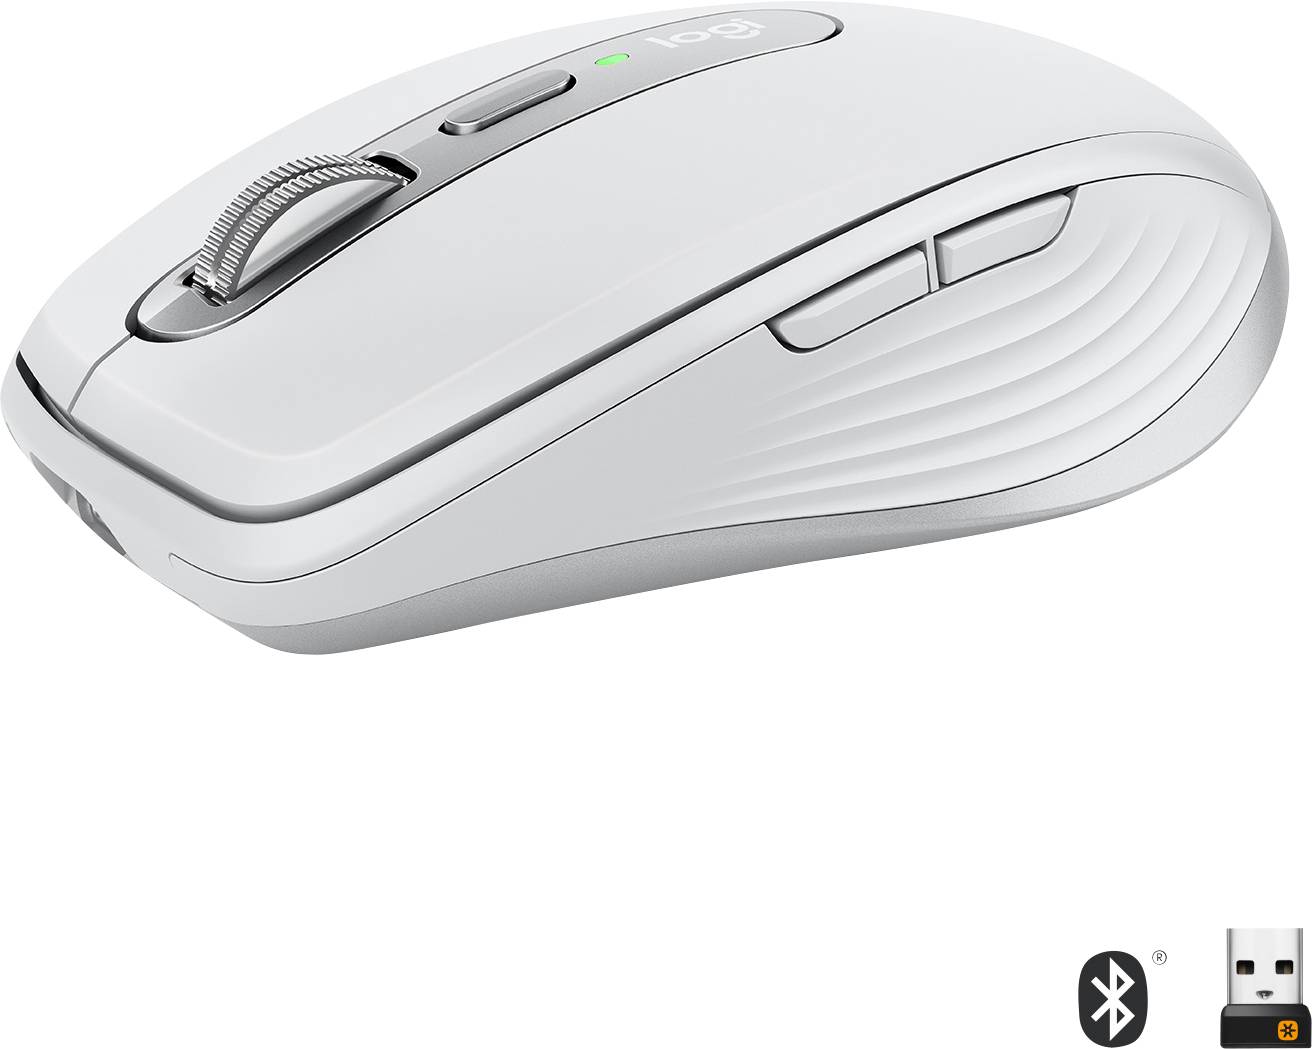 MX Anywhere 3 Wireless mouse Radio Laser Light grey 6 Buttons 1000 dpi | Conrad.com